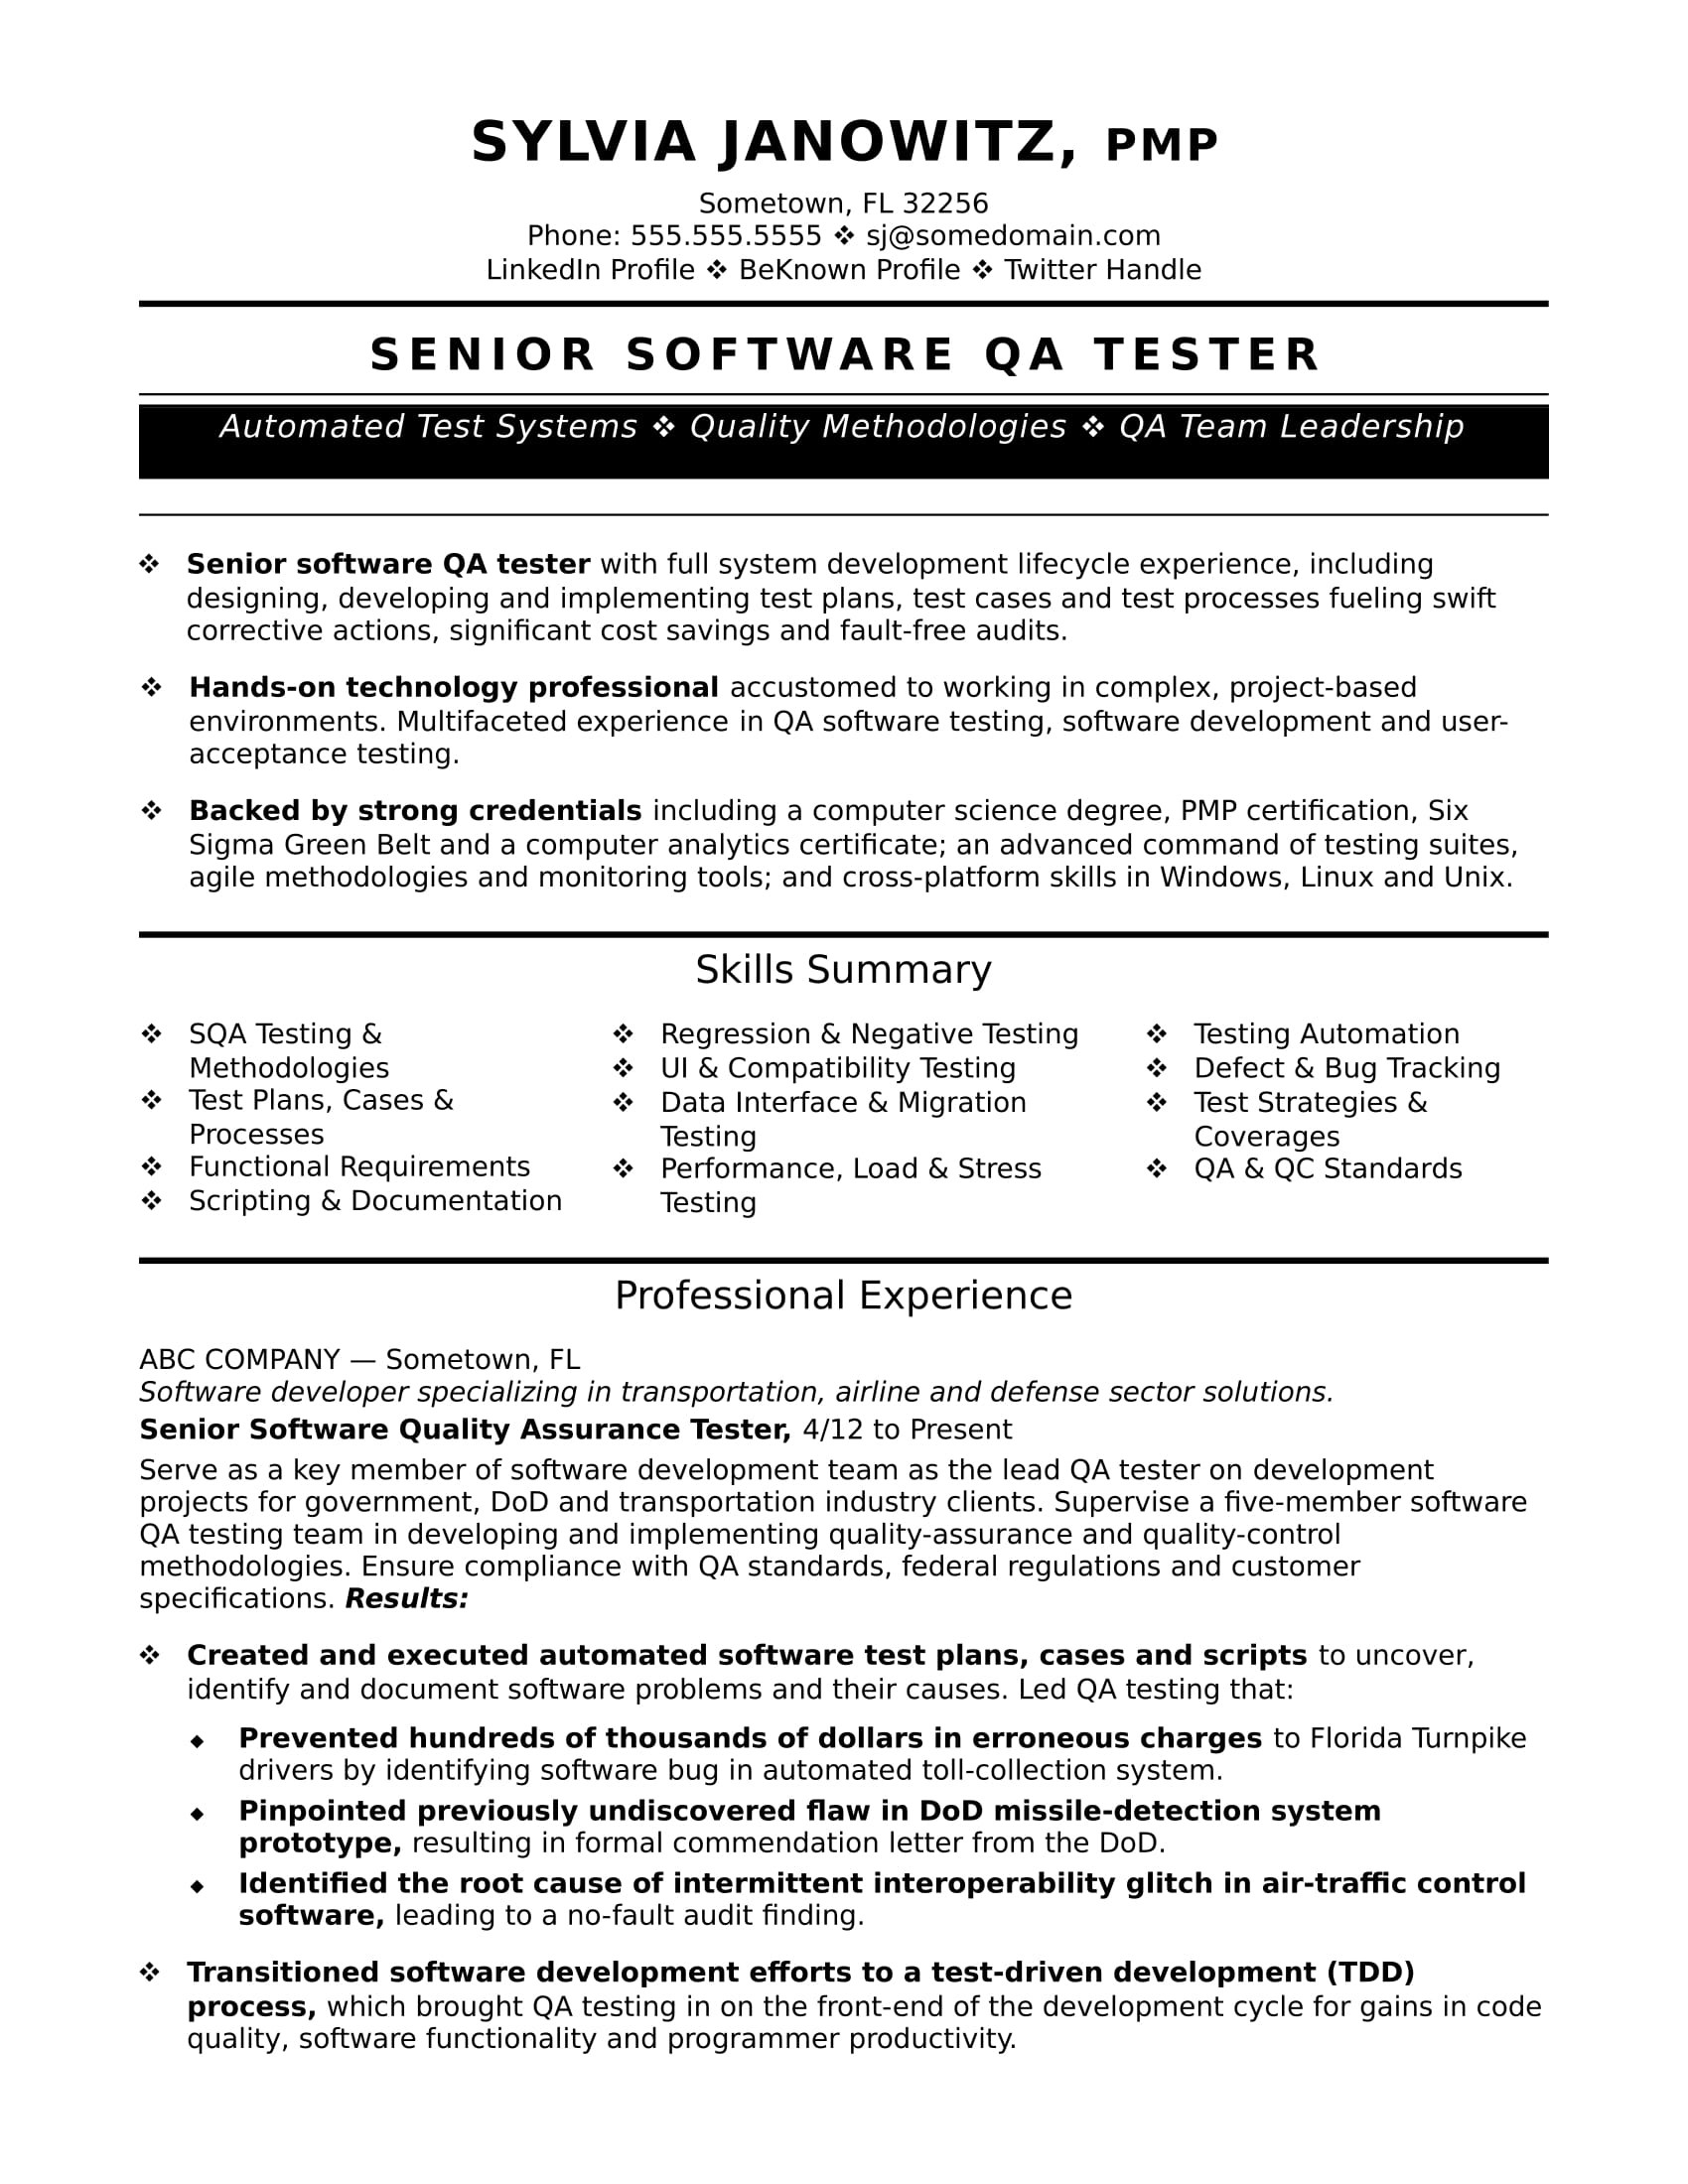 Entry Level Manual Qa Tester Resume Sample Experienced Qa software Tester Resume Sample Monster.com